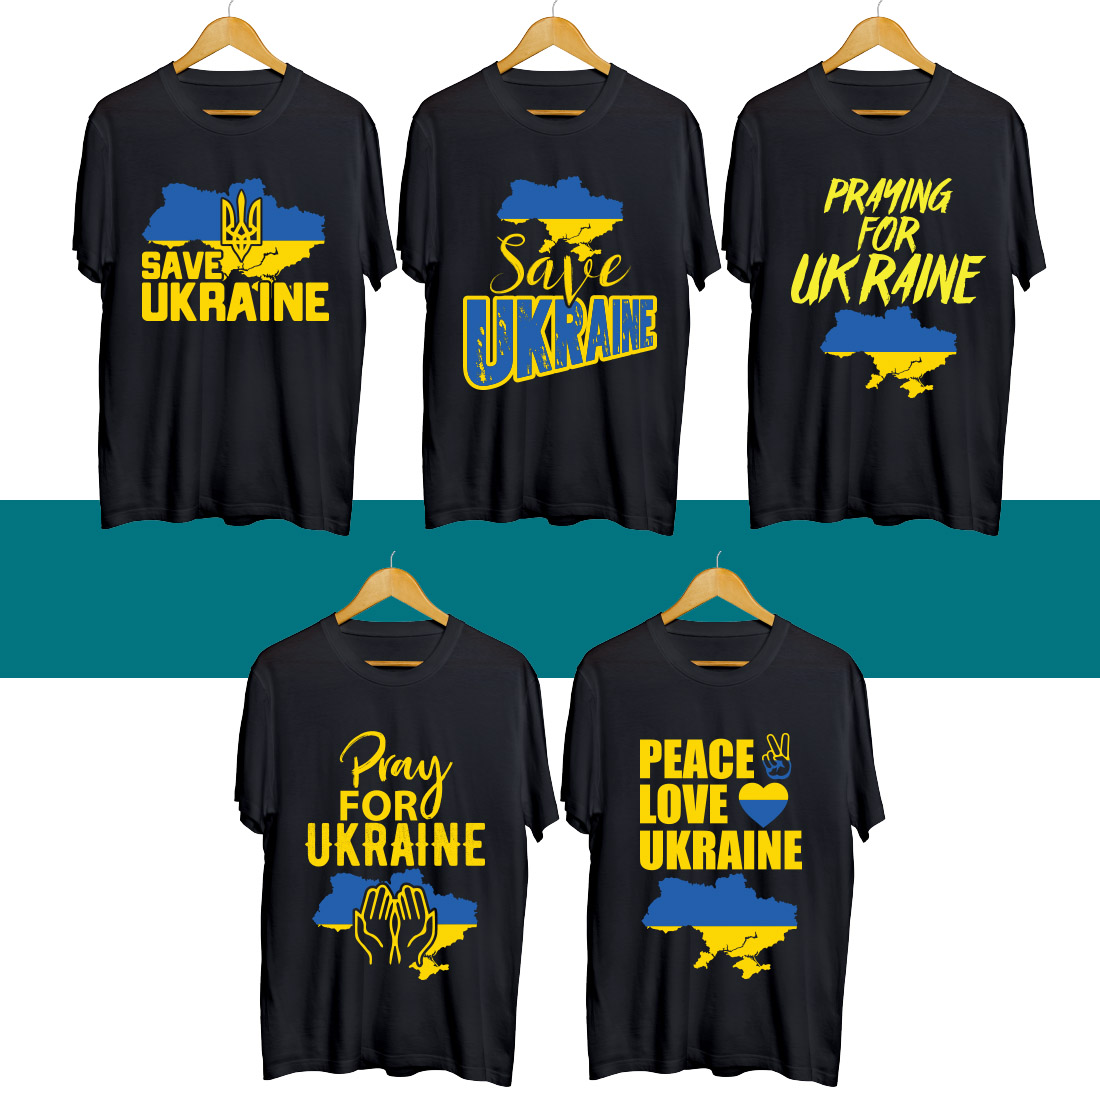 Four t - shirts that say peace love ukraine.